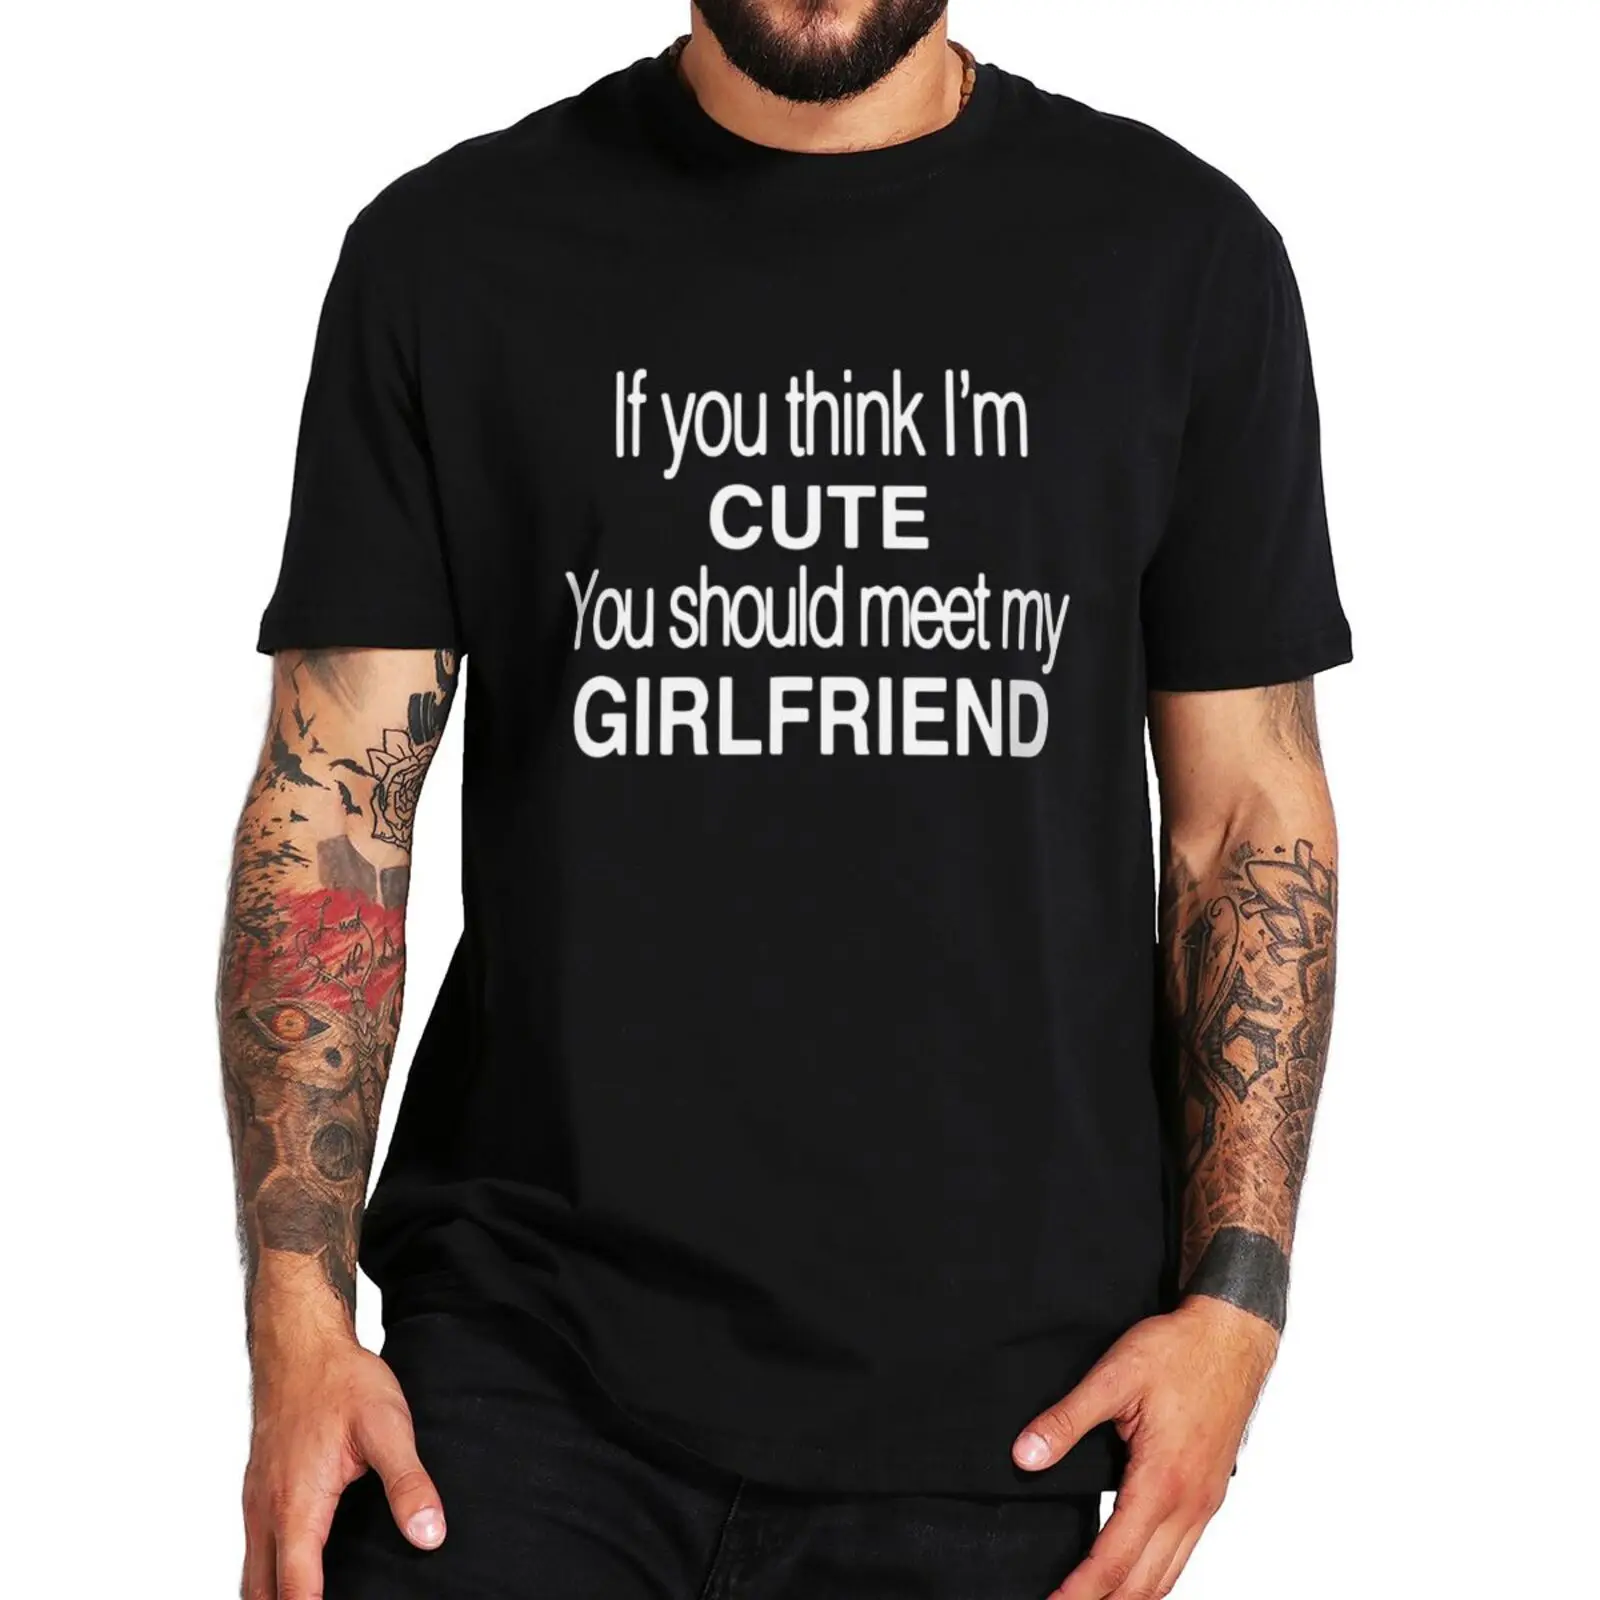 

If You Think I'm Cute You Should Meet My Girlfriend T Shirt Funny Saying For Boyfriend Gift Tee Top Casual Summer Cotton T-shirt